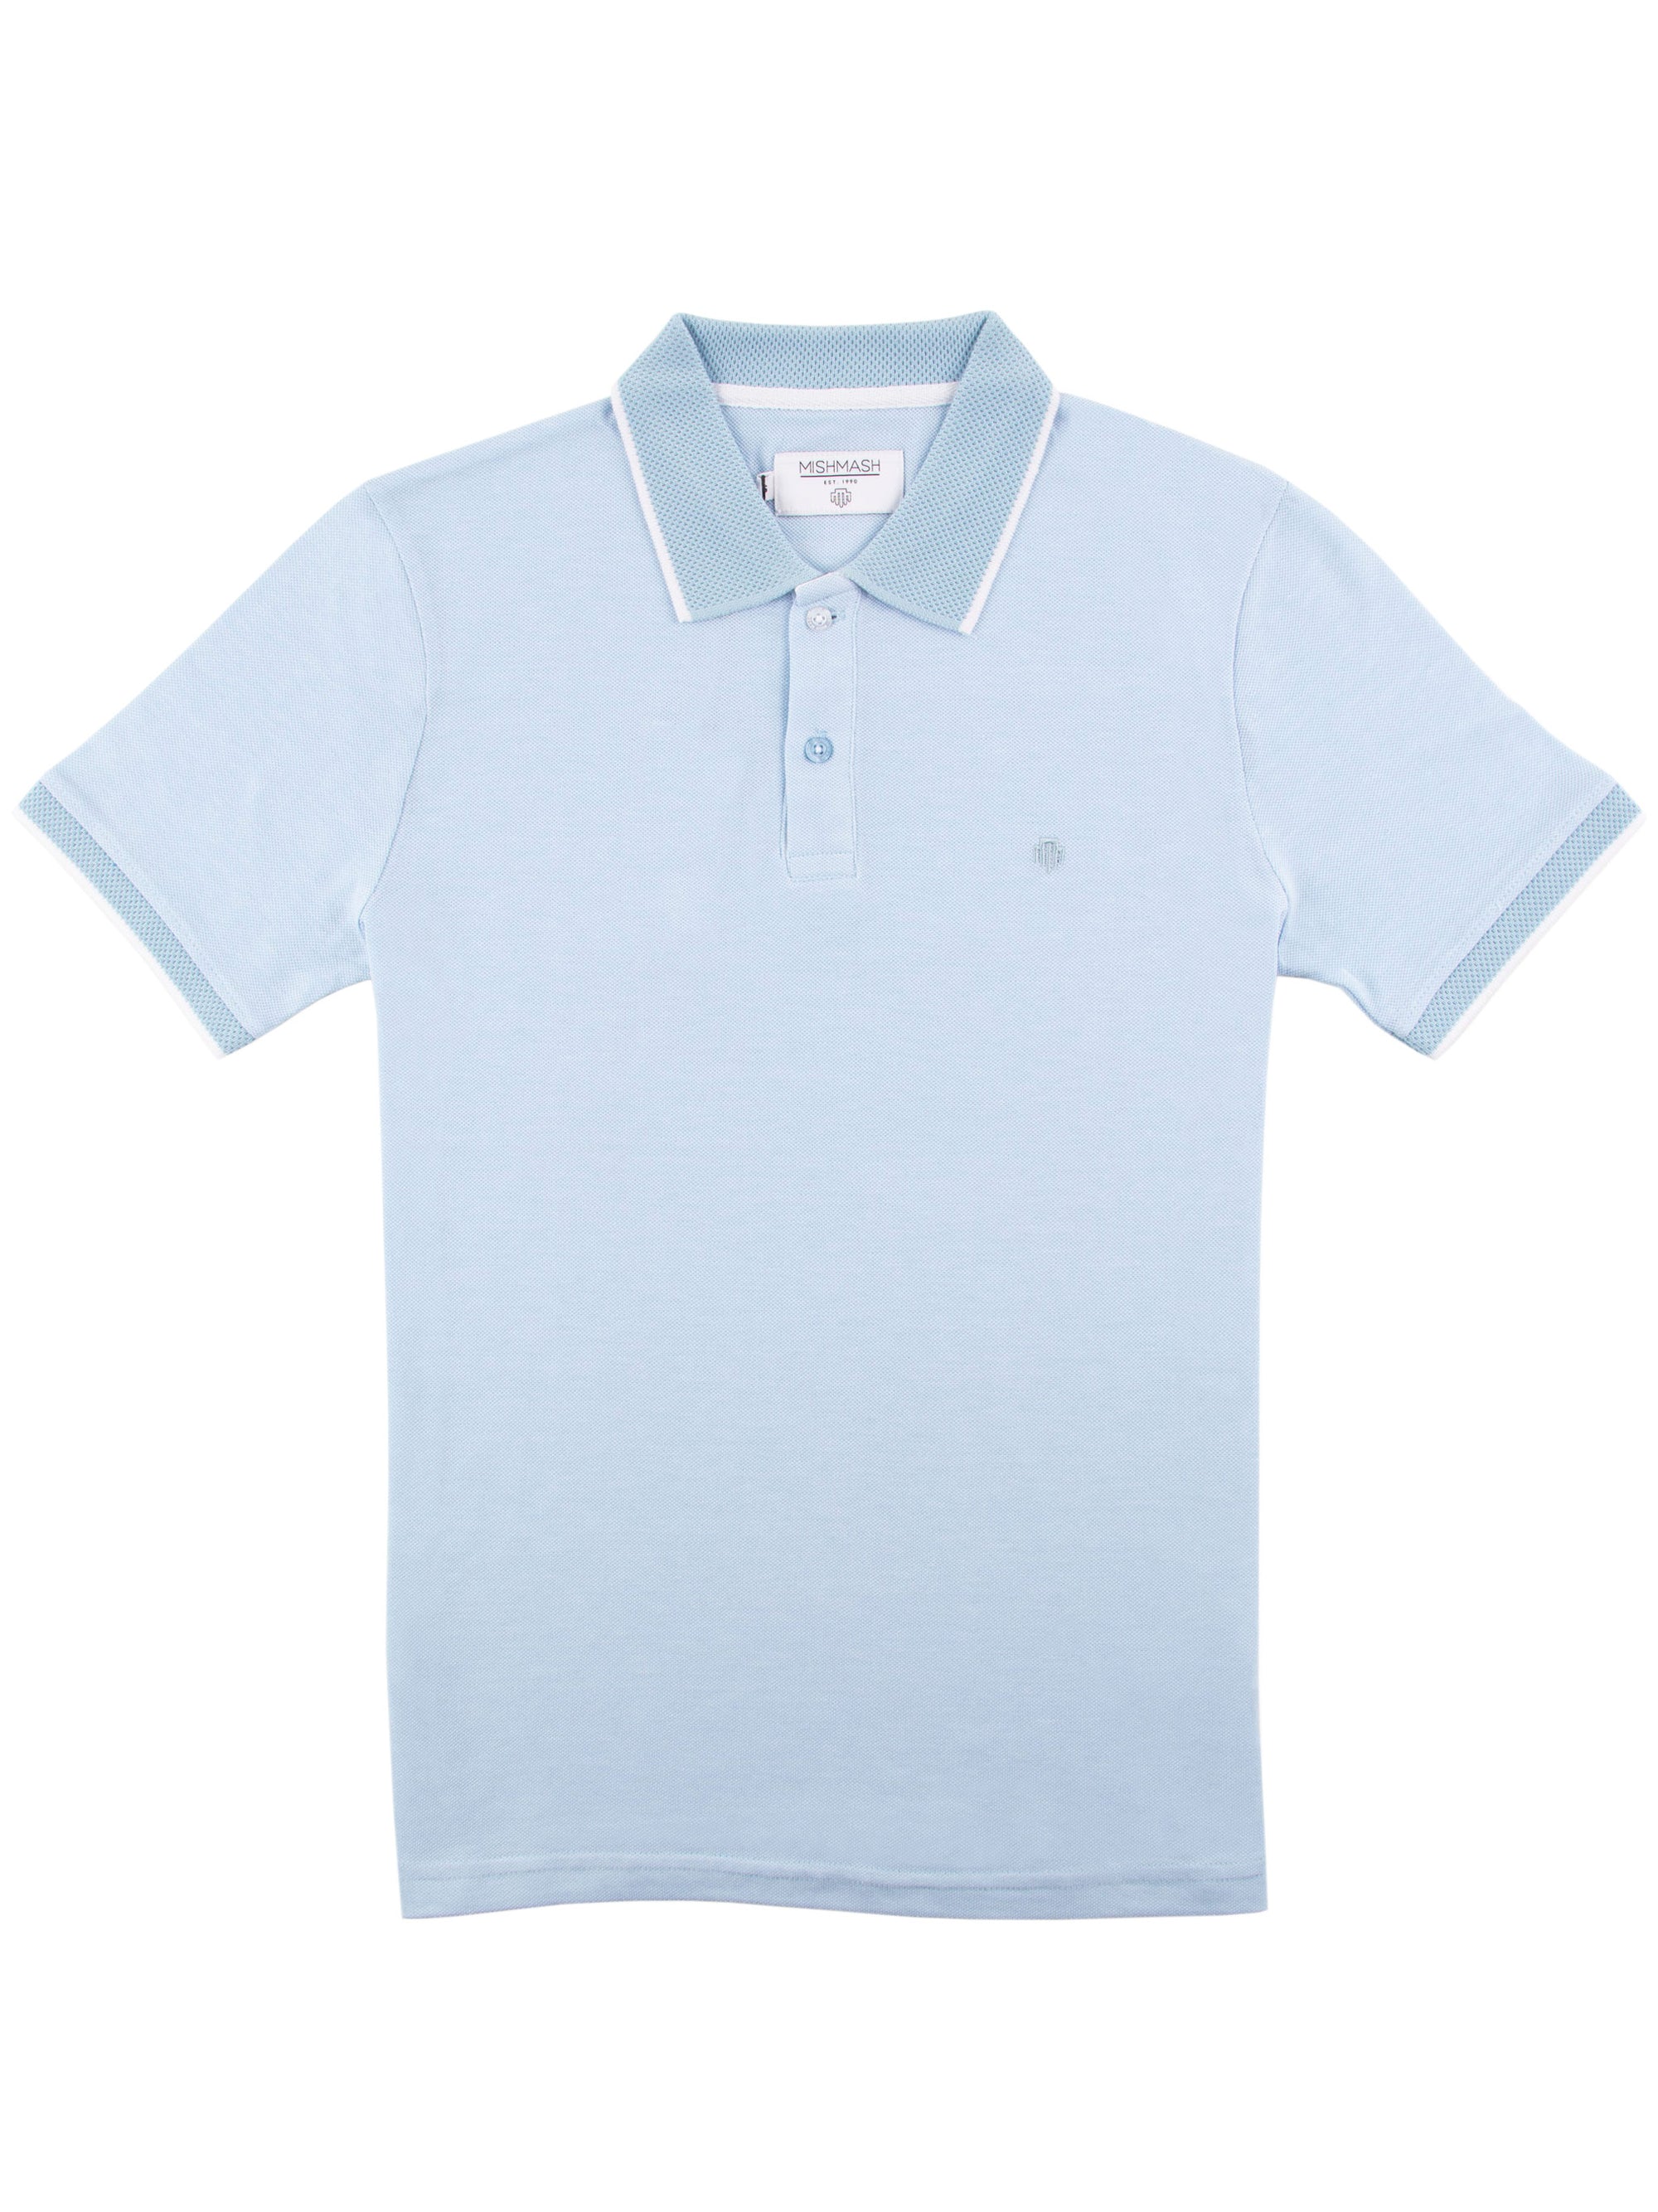 memphis-sky-blue-pique-mens-classic-short-sleeve-polo-shirt-mish-mash